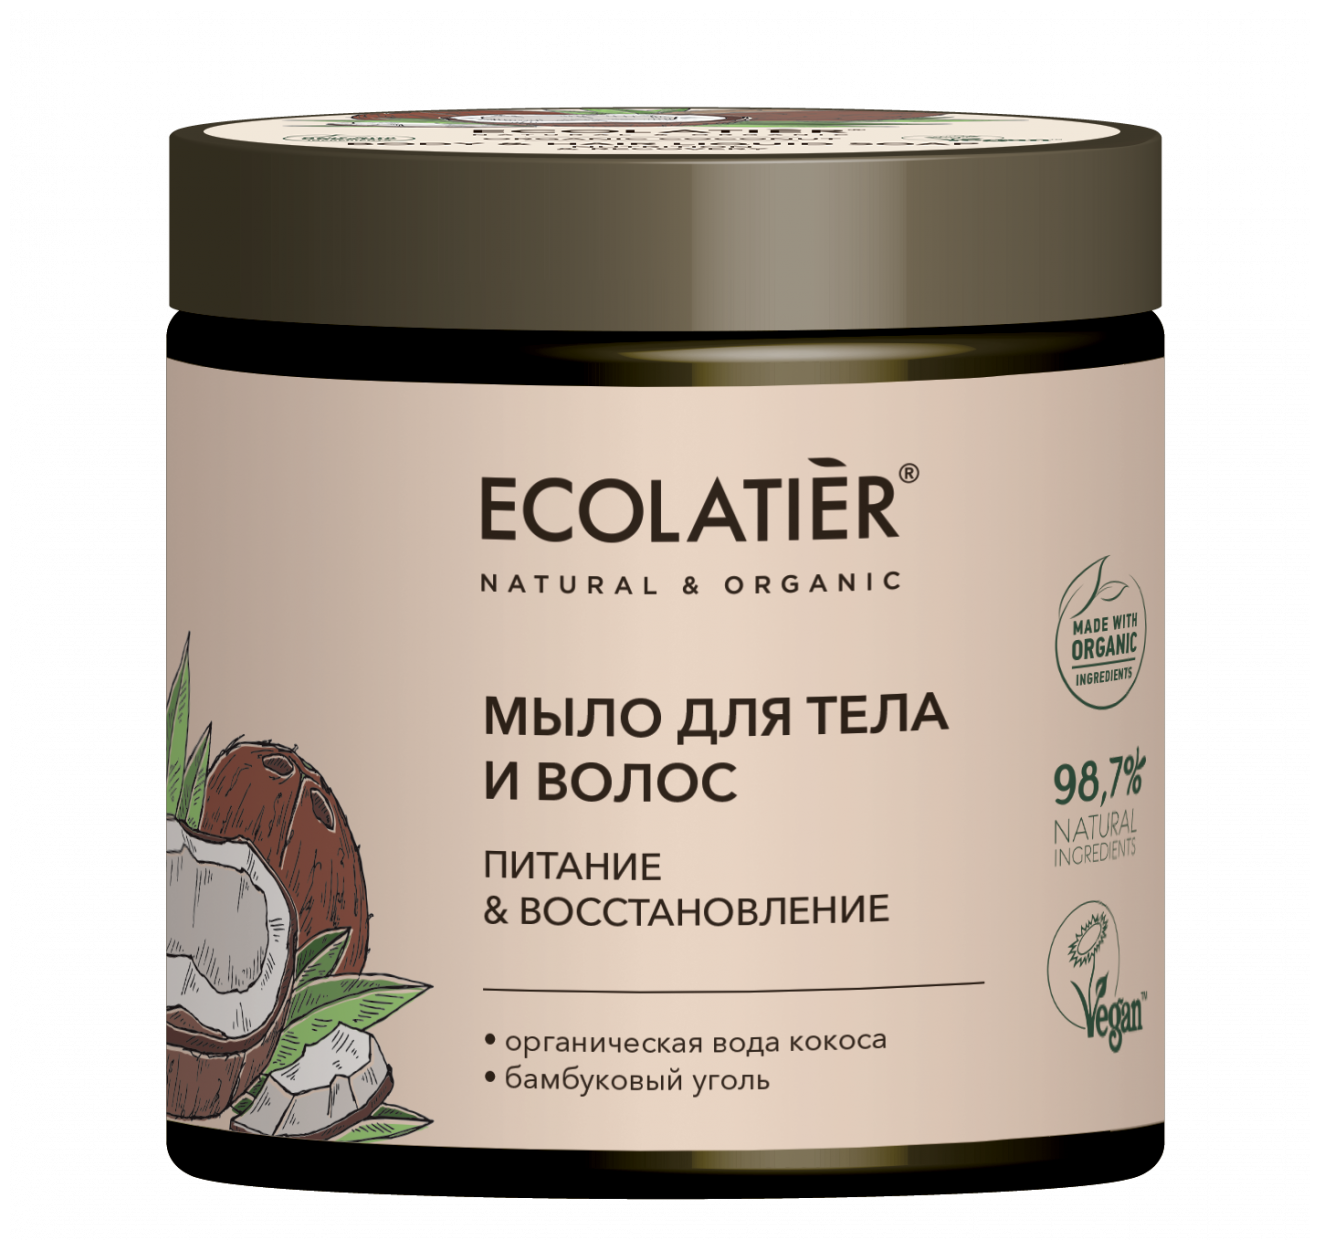 Ecolatier Organic Farm GREEN "COCONUT Oil" Мыло д/тела и волос Питание+Восст.350мл